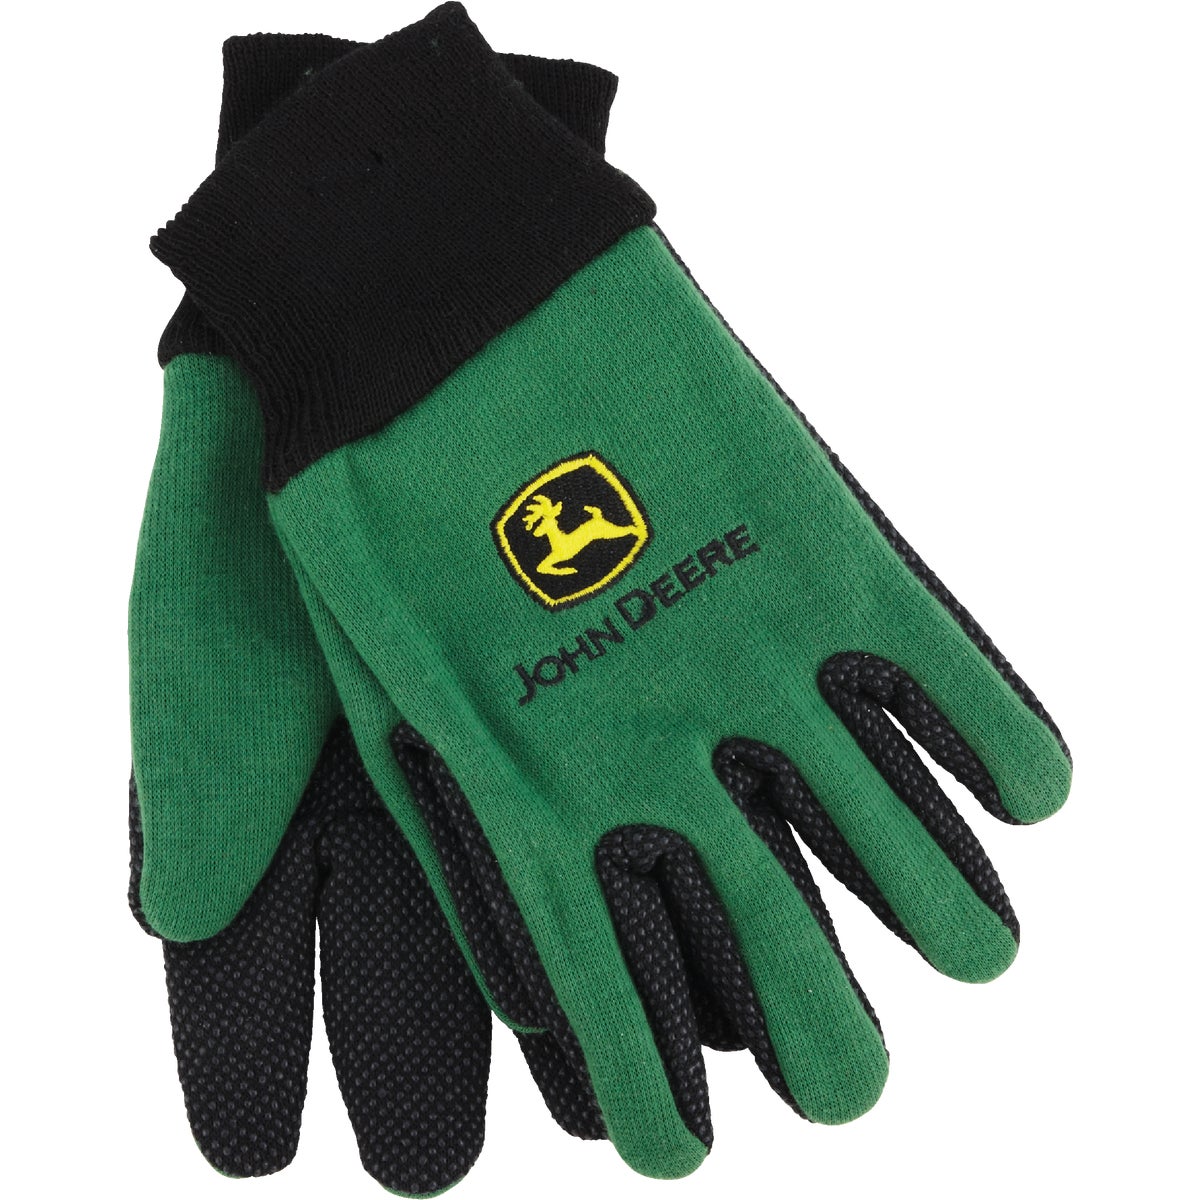 Item 701751, Jersey light-duty chore glove.